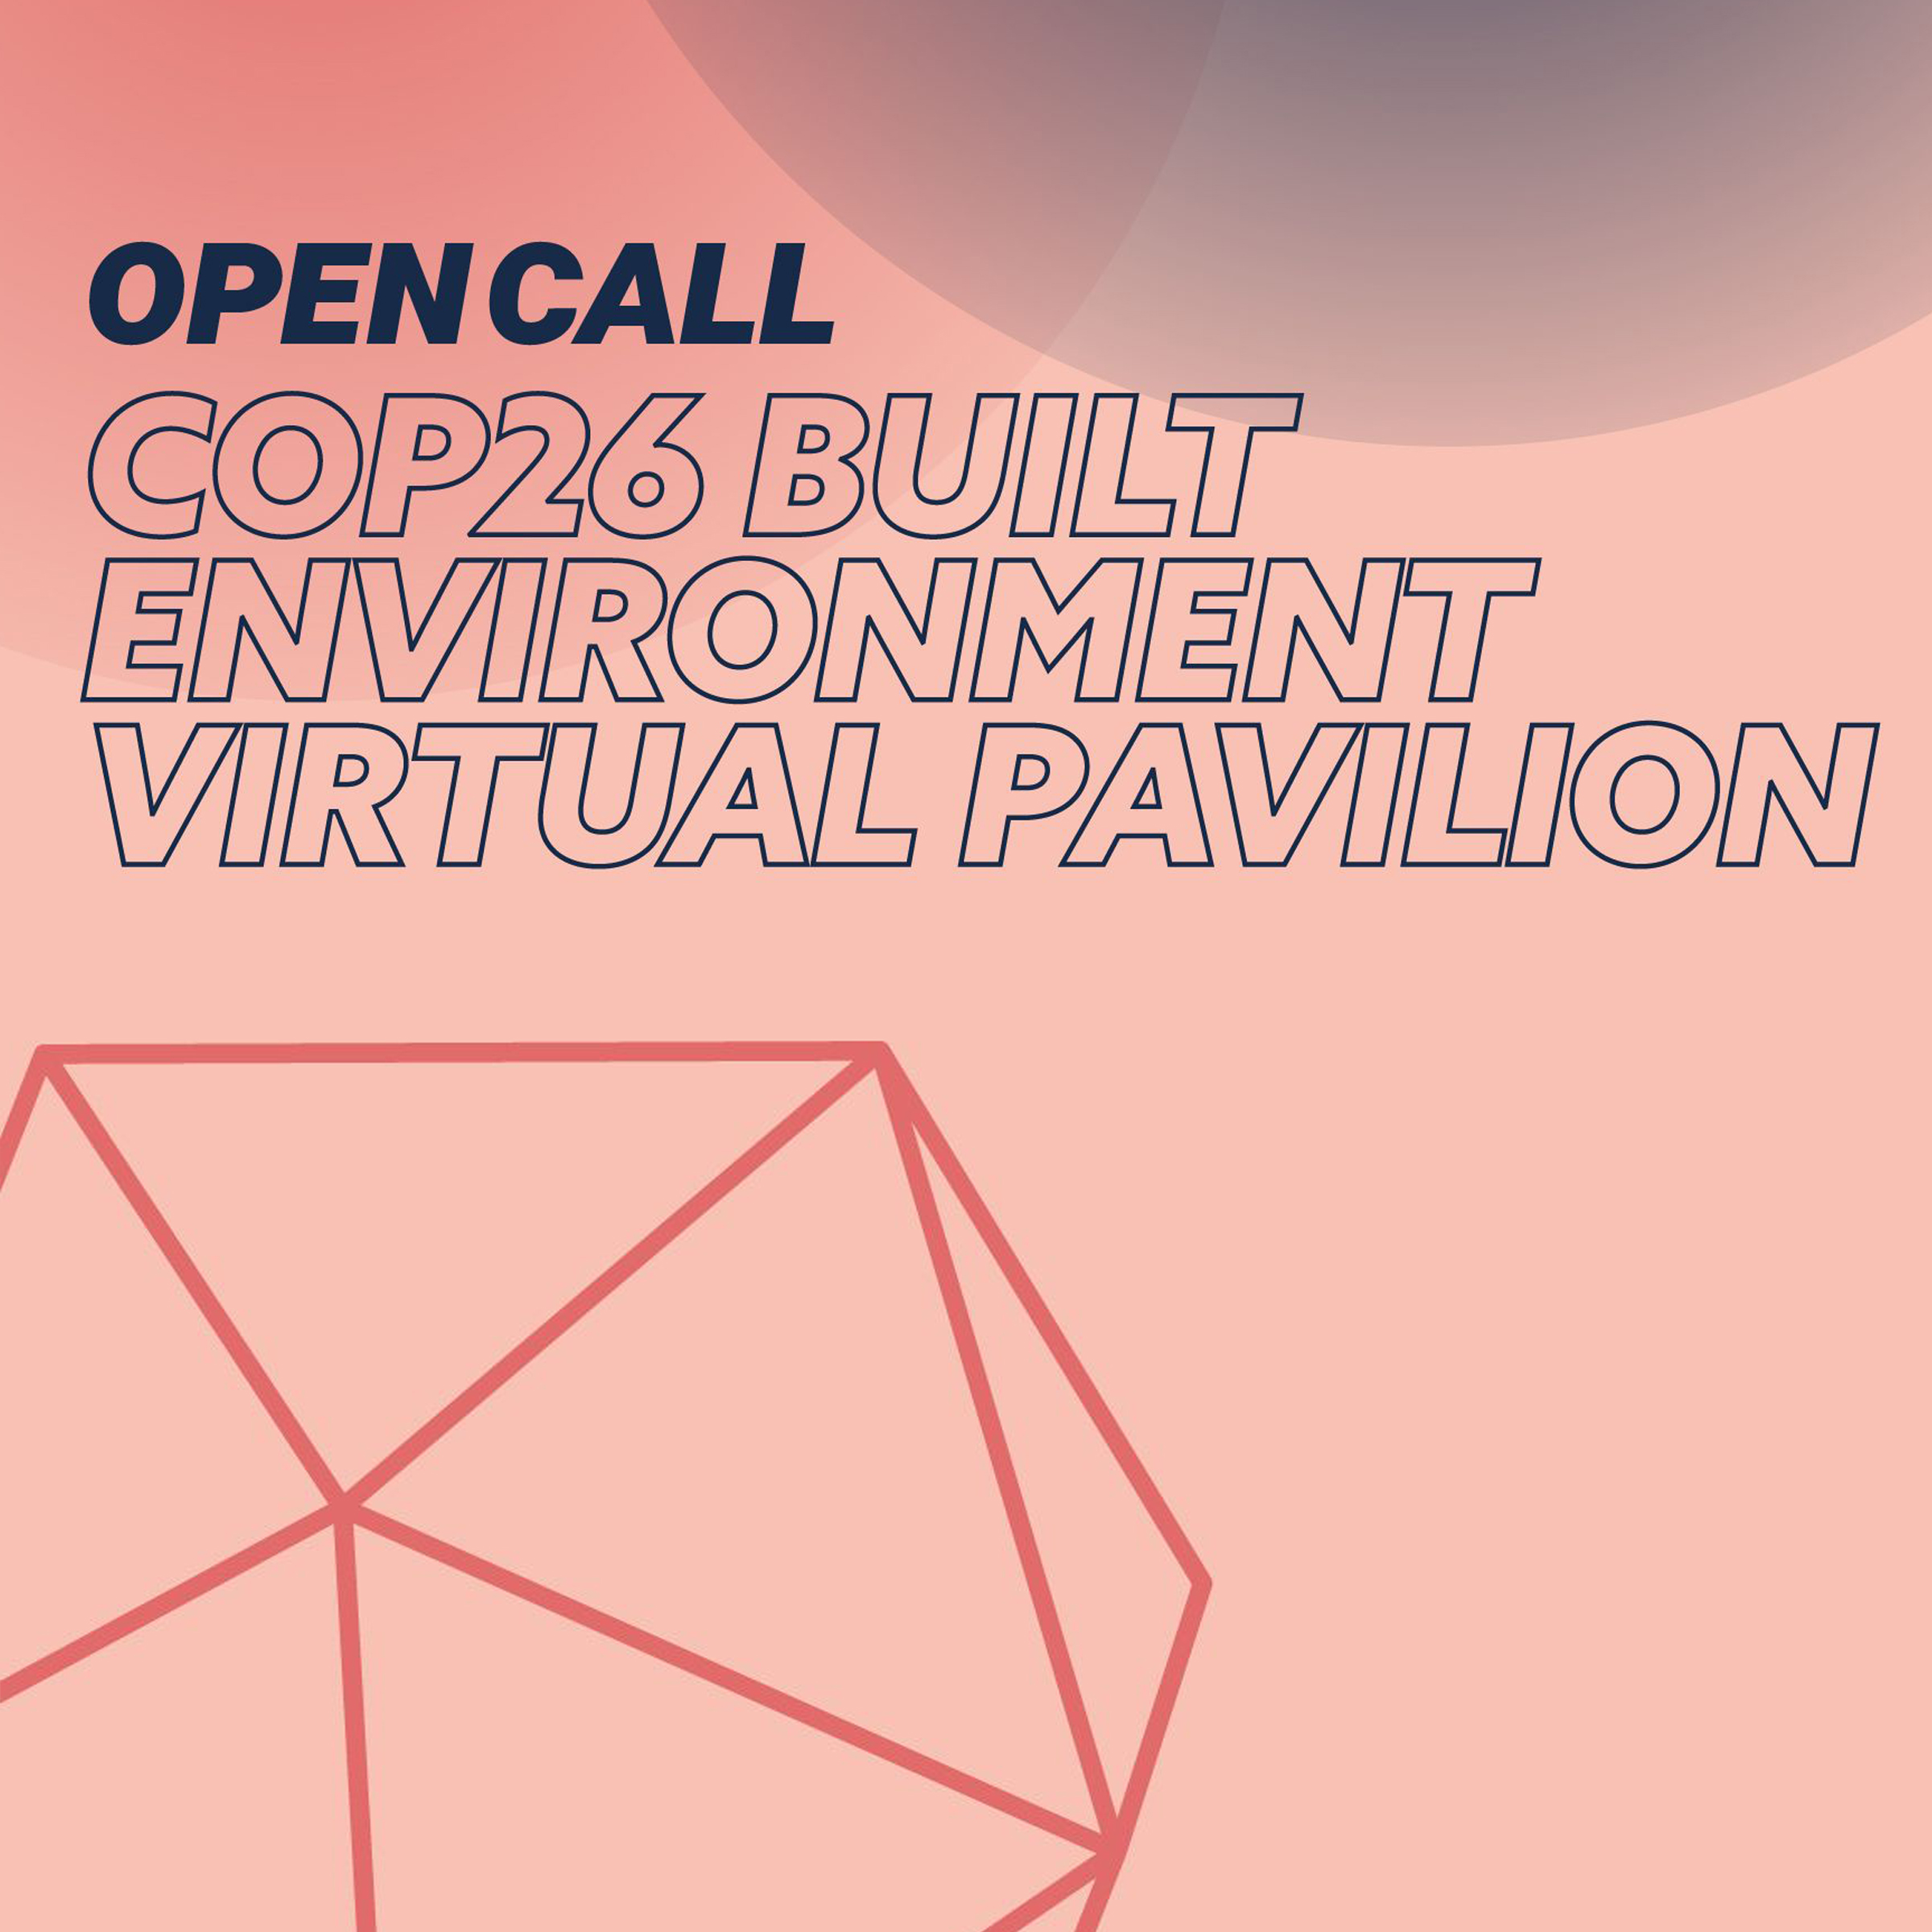 Open call launches for COP26 Built Environment Virtual Pavilion